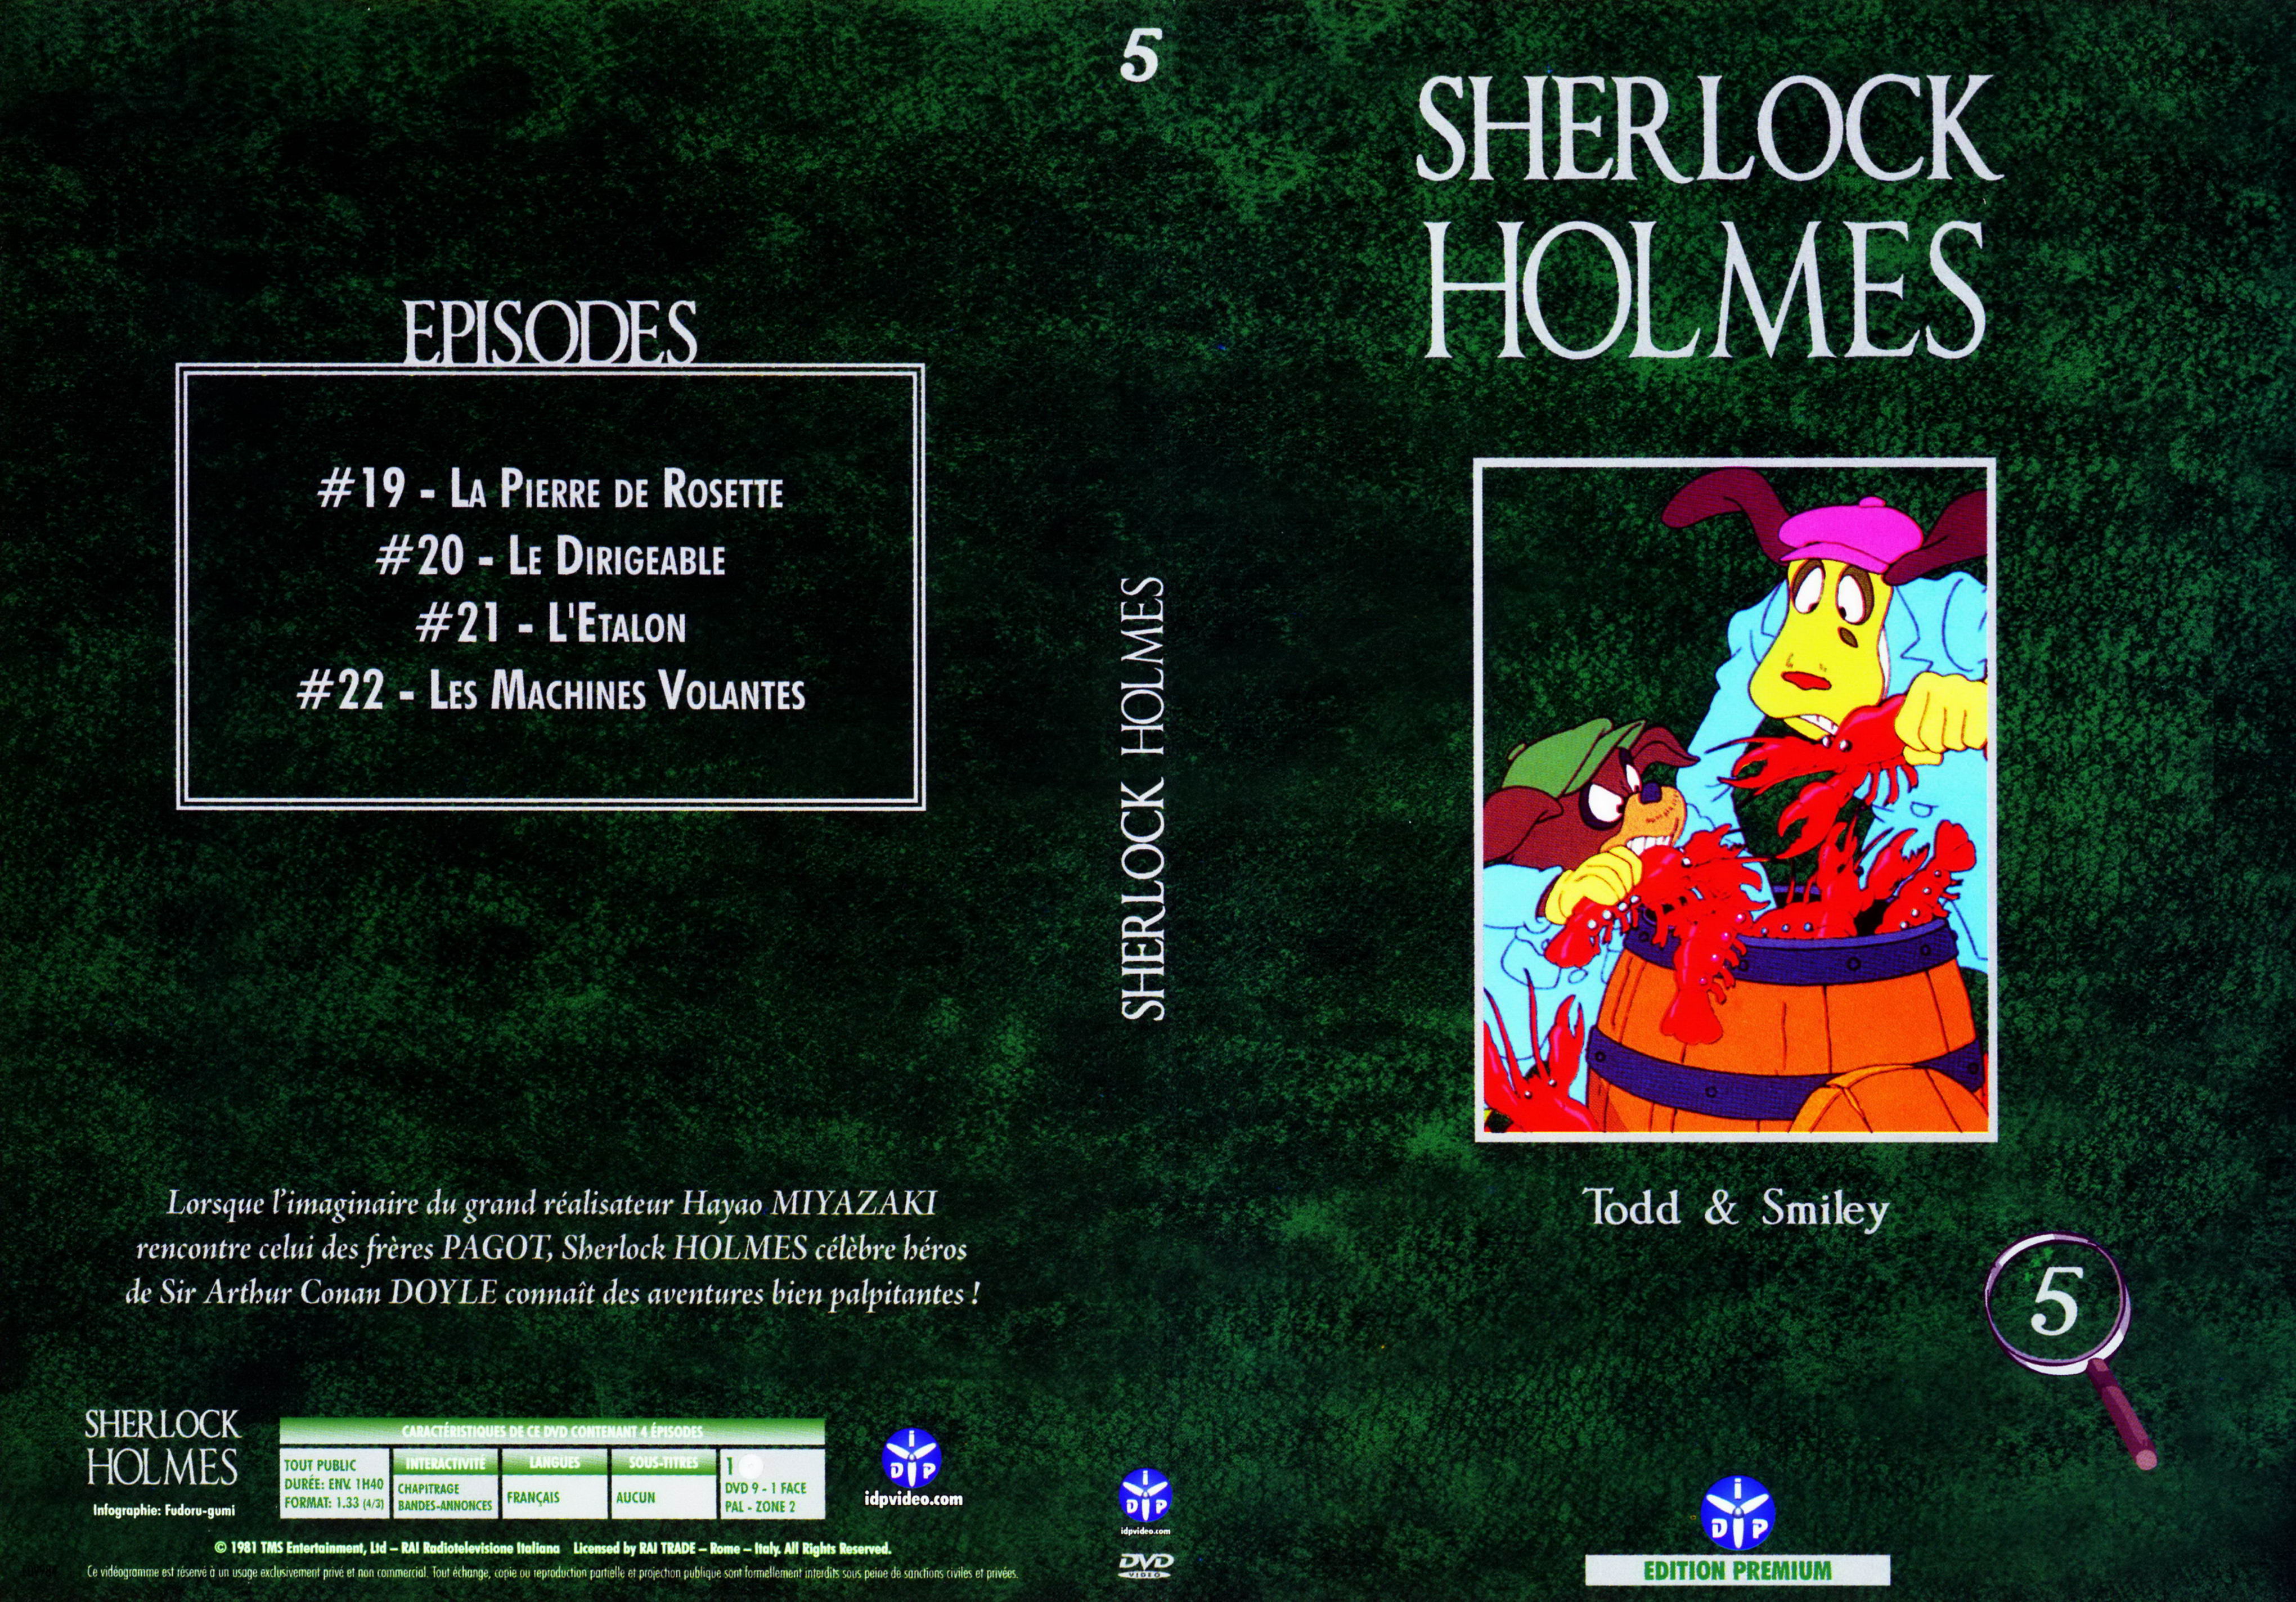 Jaquette DVD Sherlock Holmes vol 5 v2